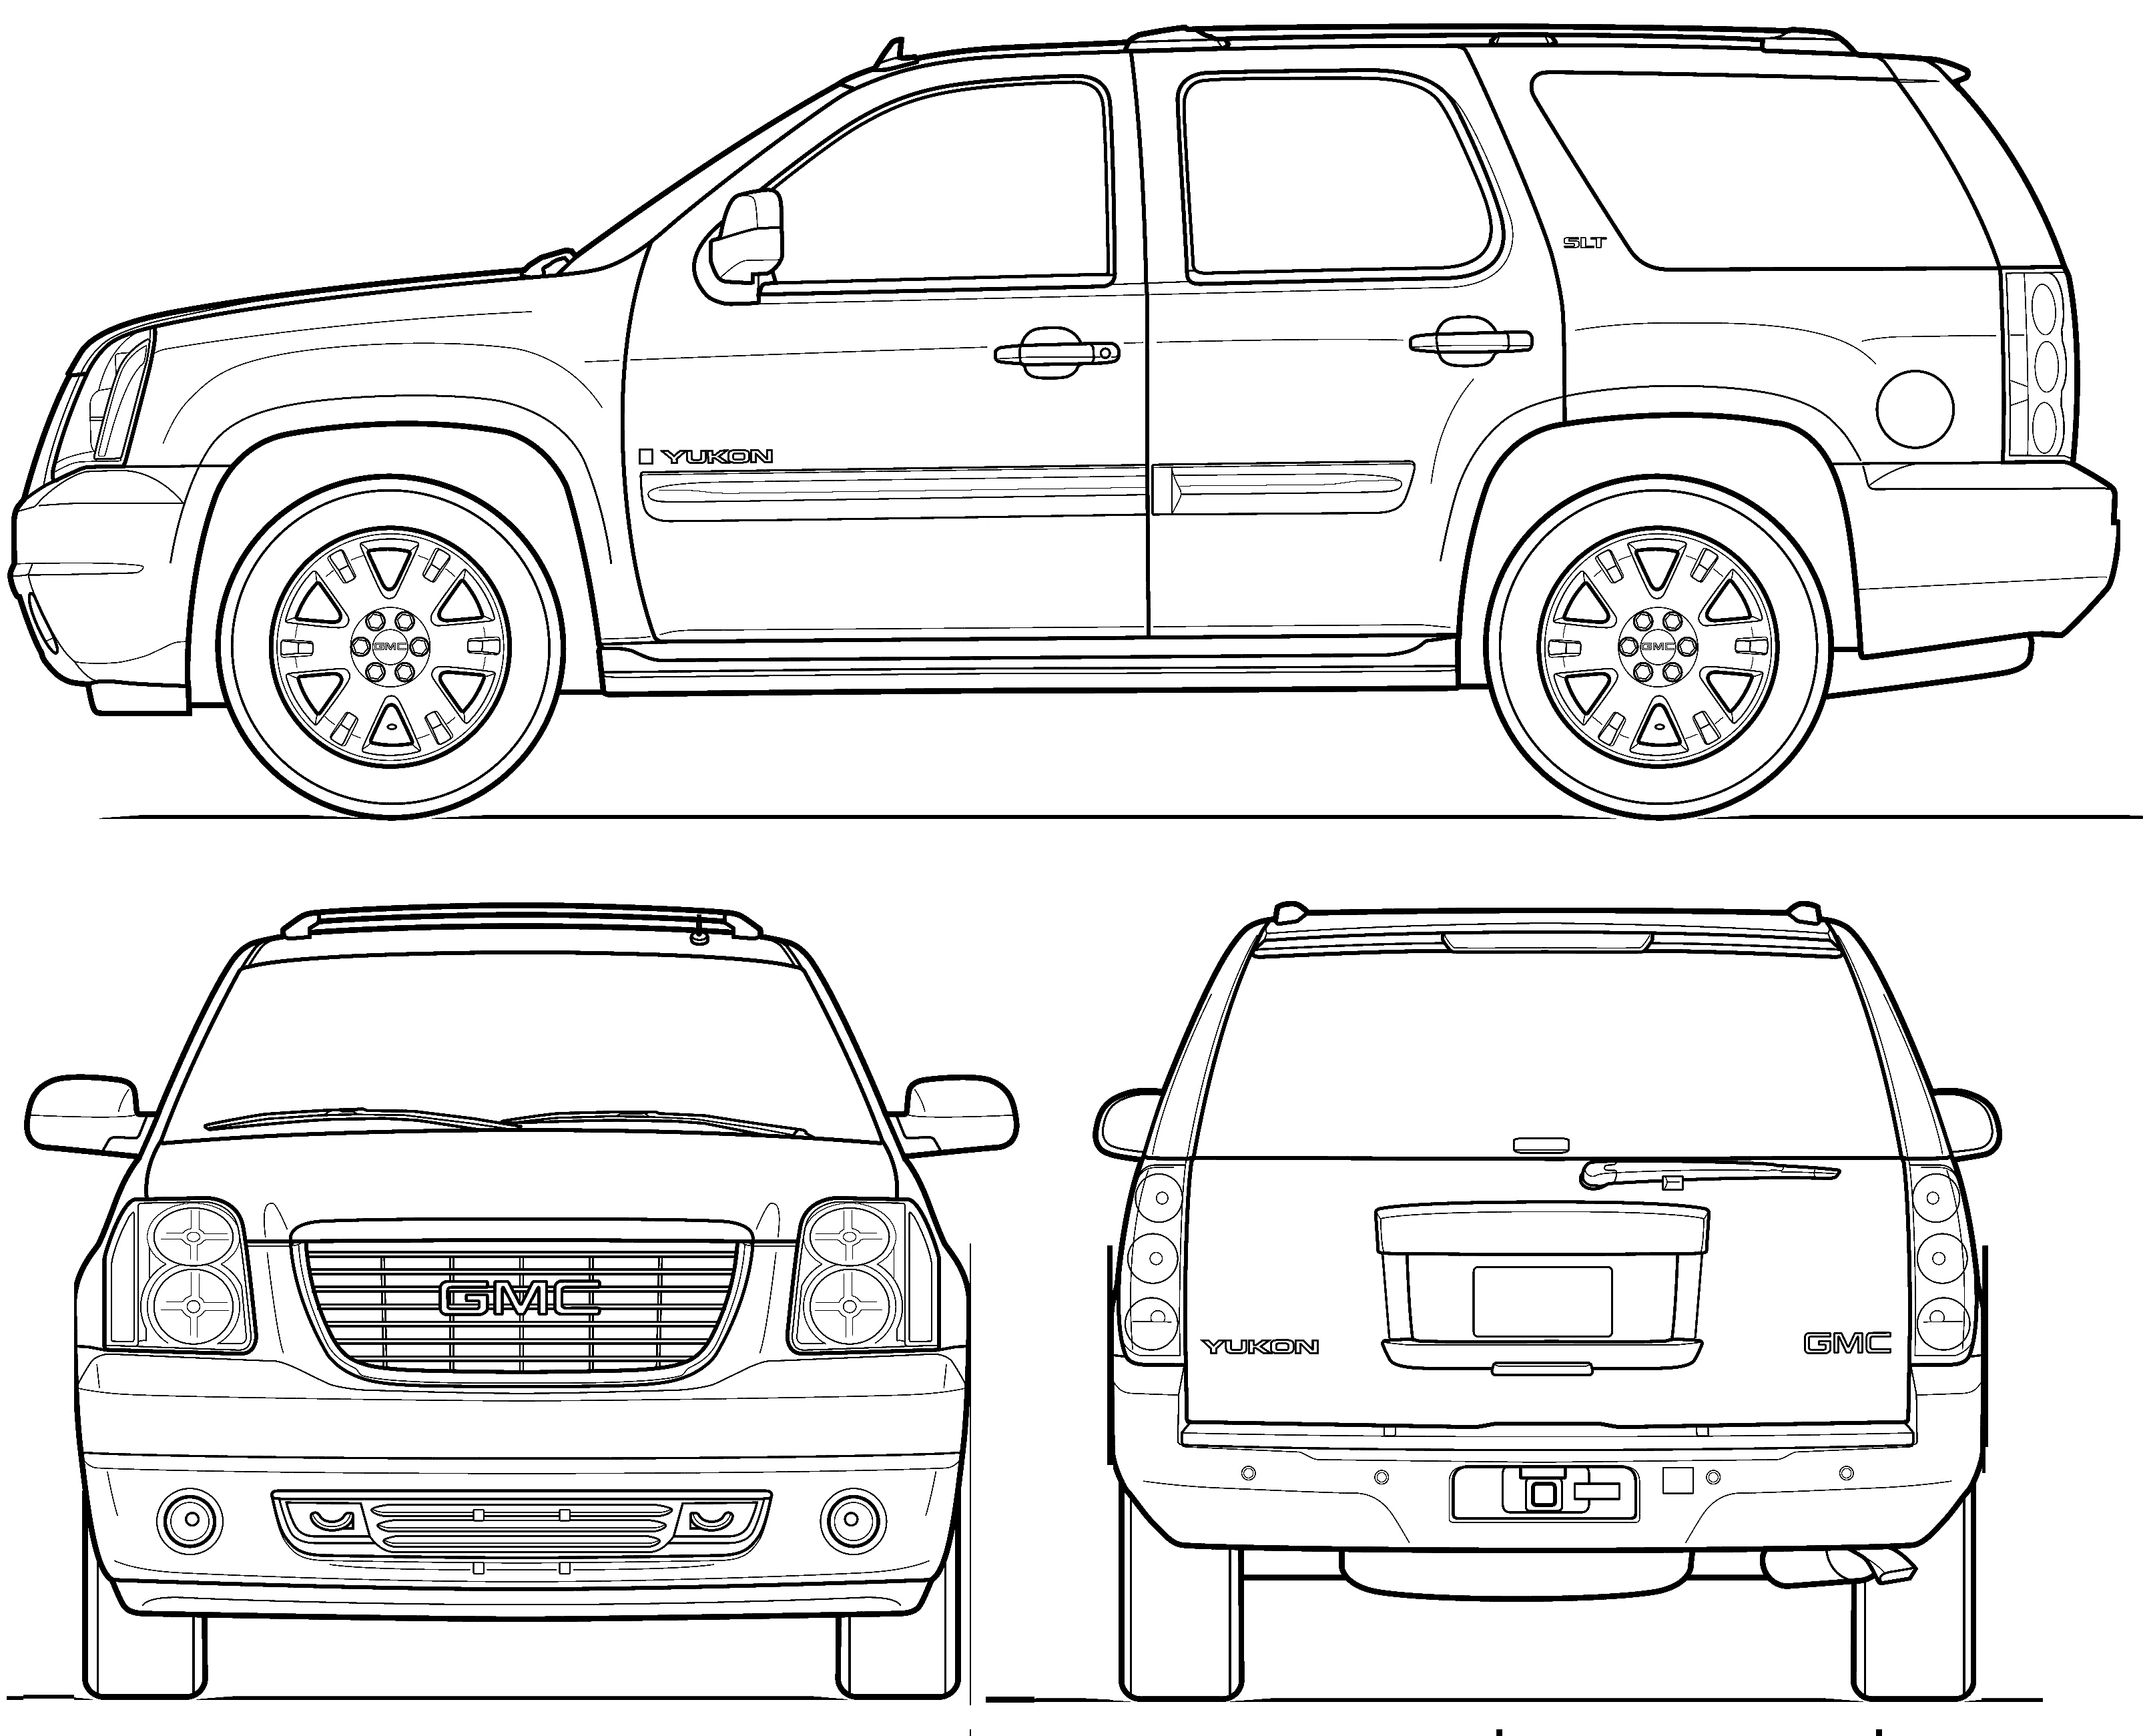 2009 GMC Yukon SUV blueprints free - Outlines